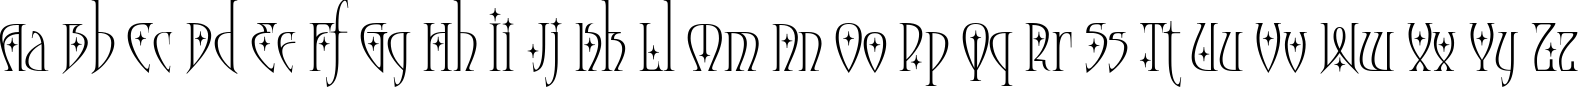 Пример написания английского алфавита шрифтом Moonstone Stars